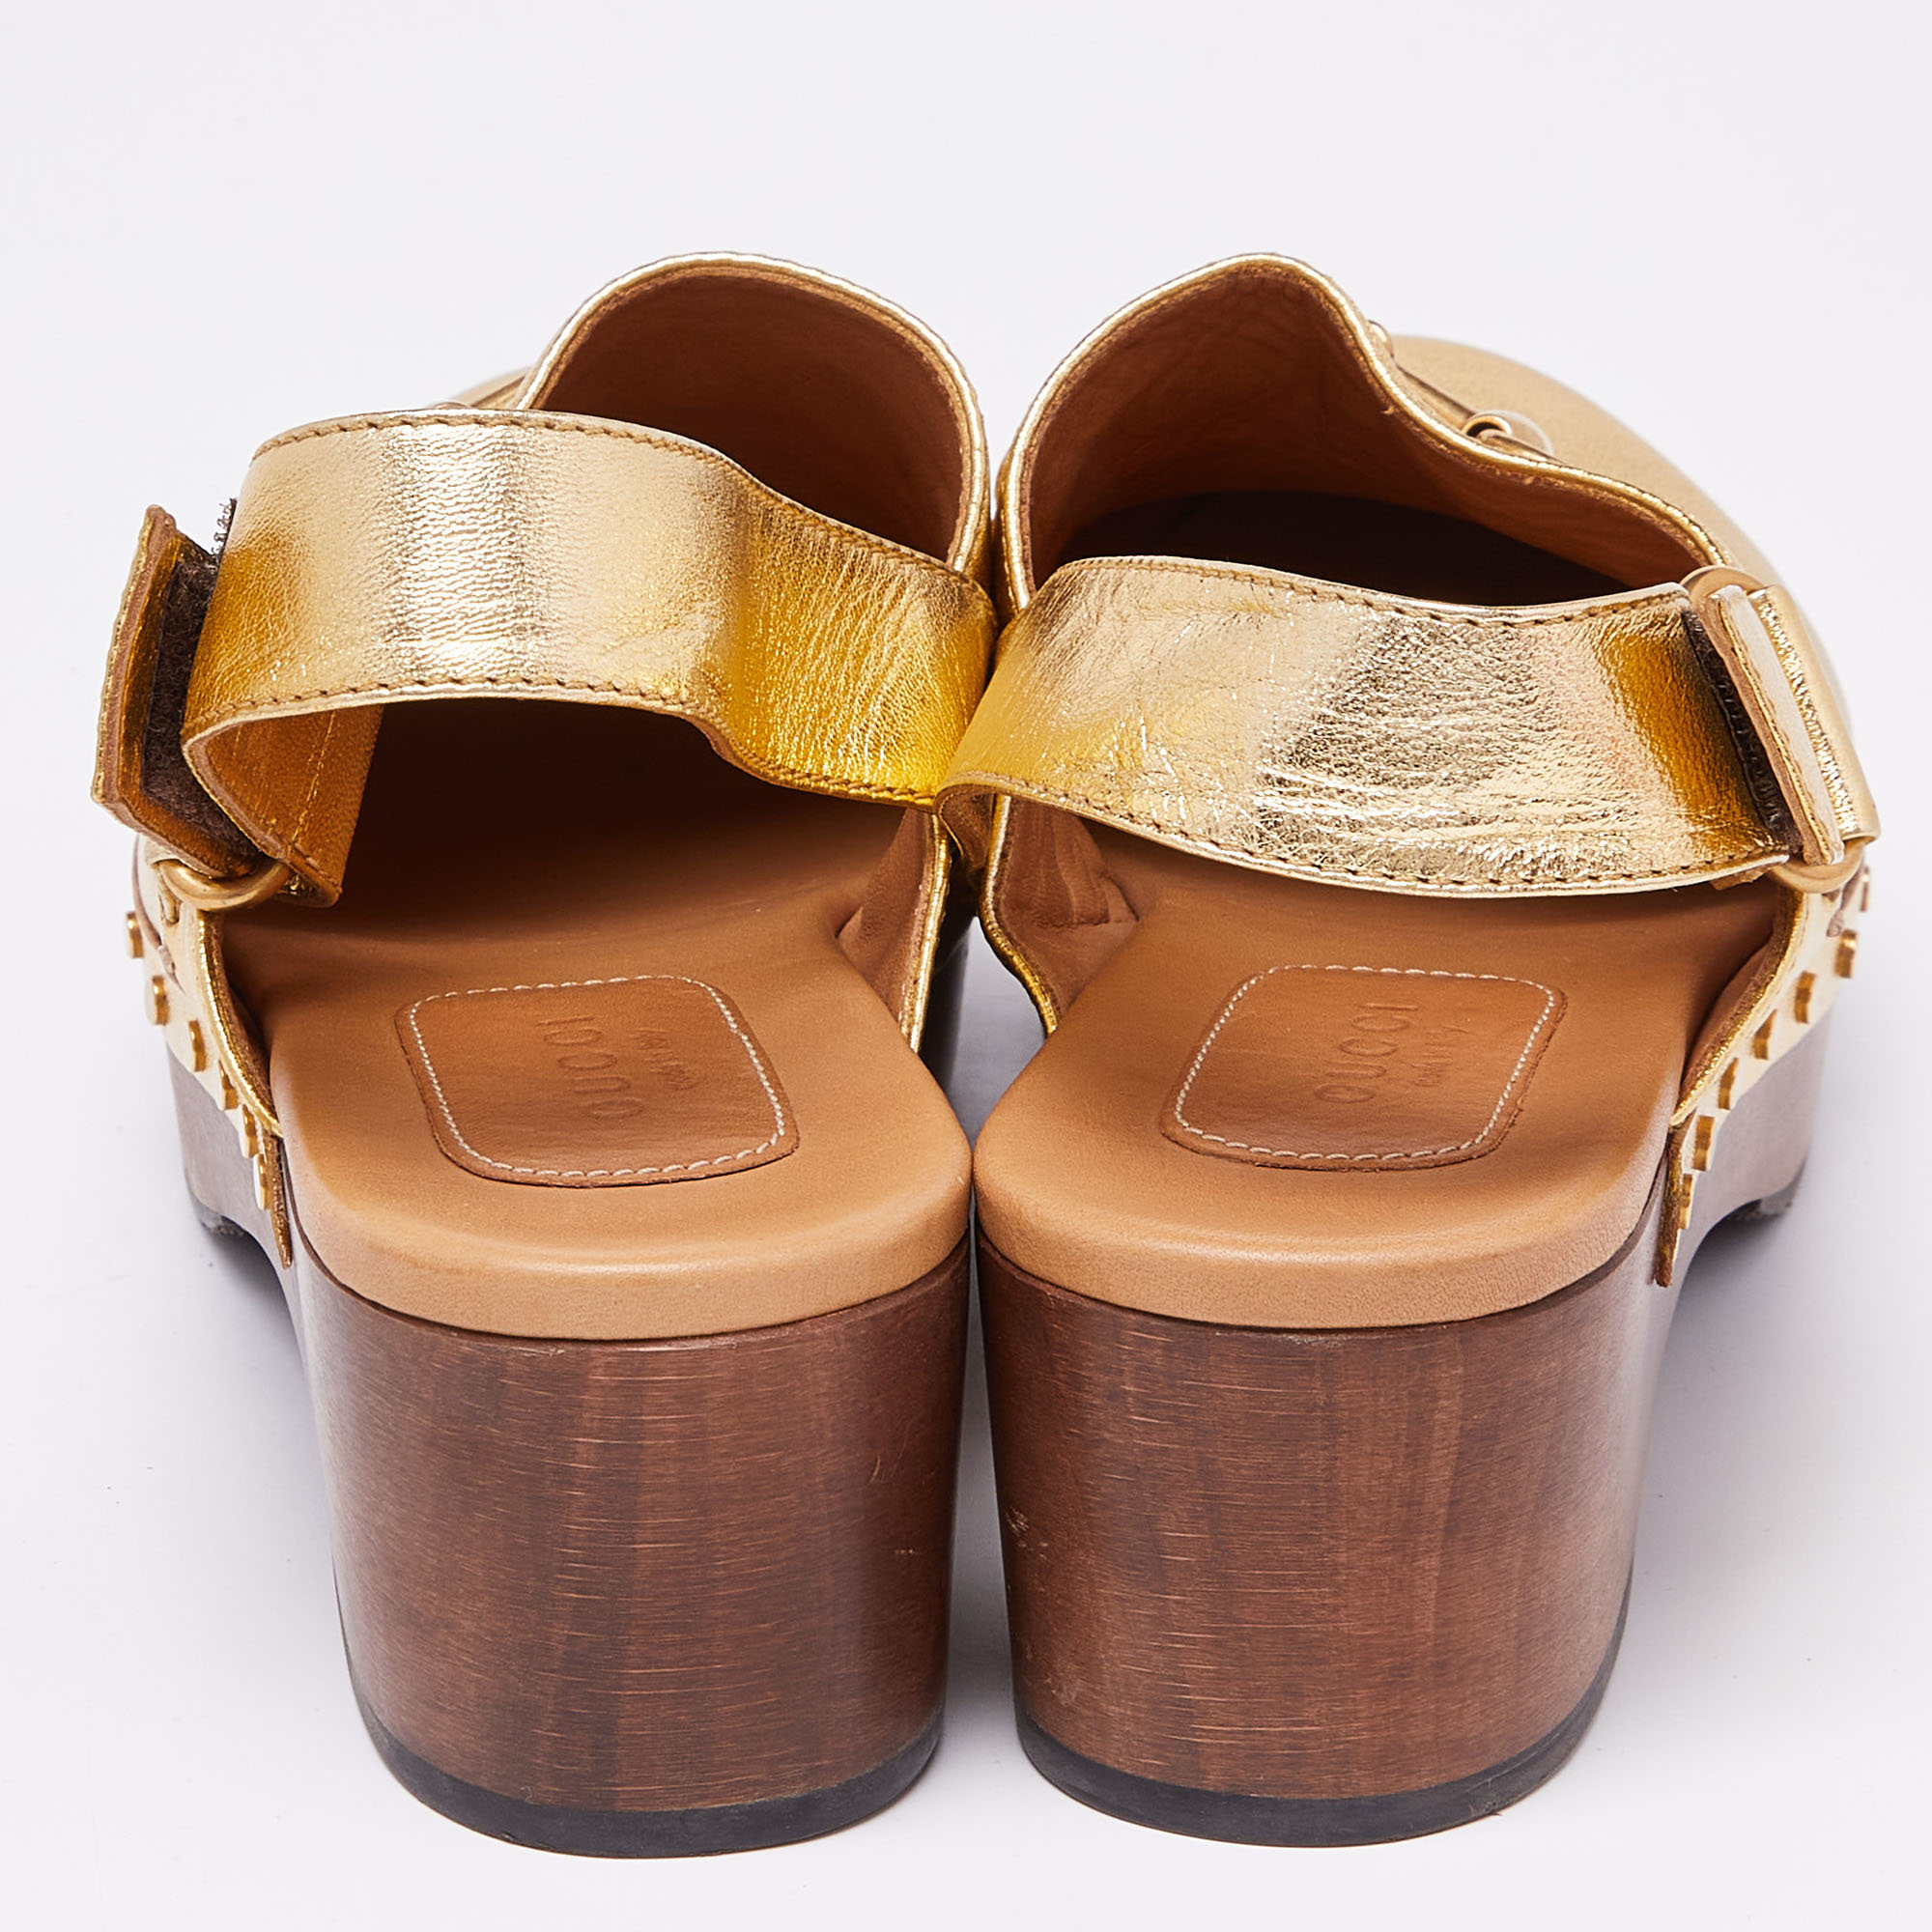 Gucci Gold Leather Amstel Horsebit Slingback Clog Sandals Size 38